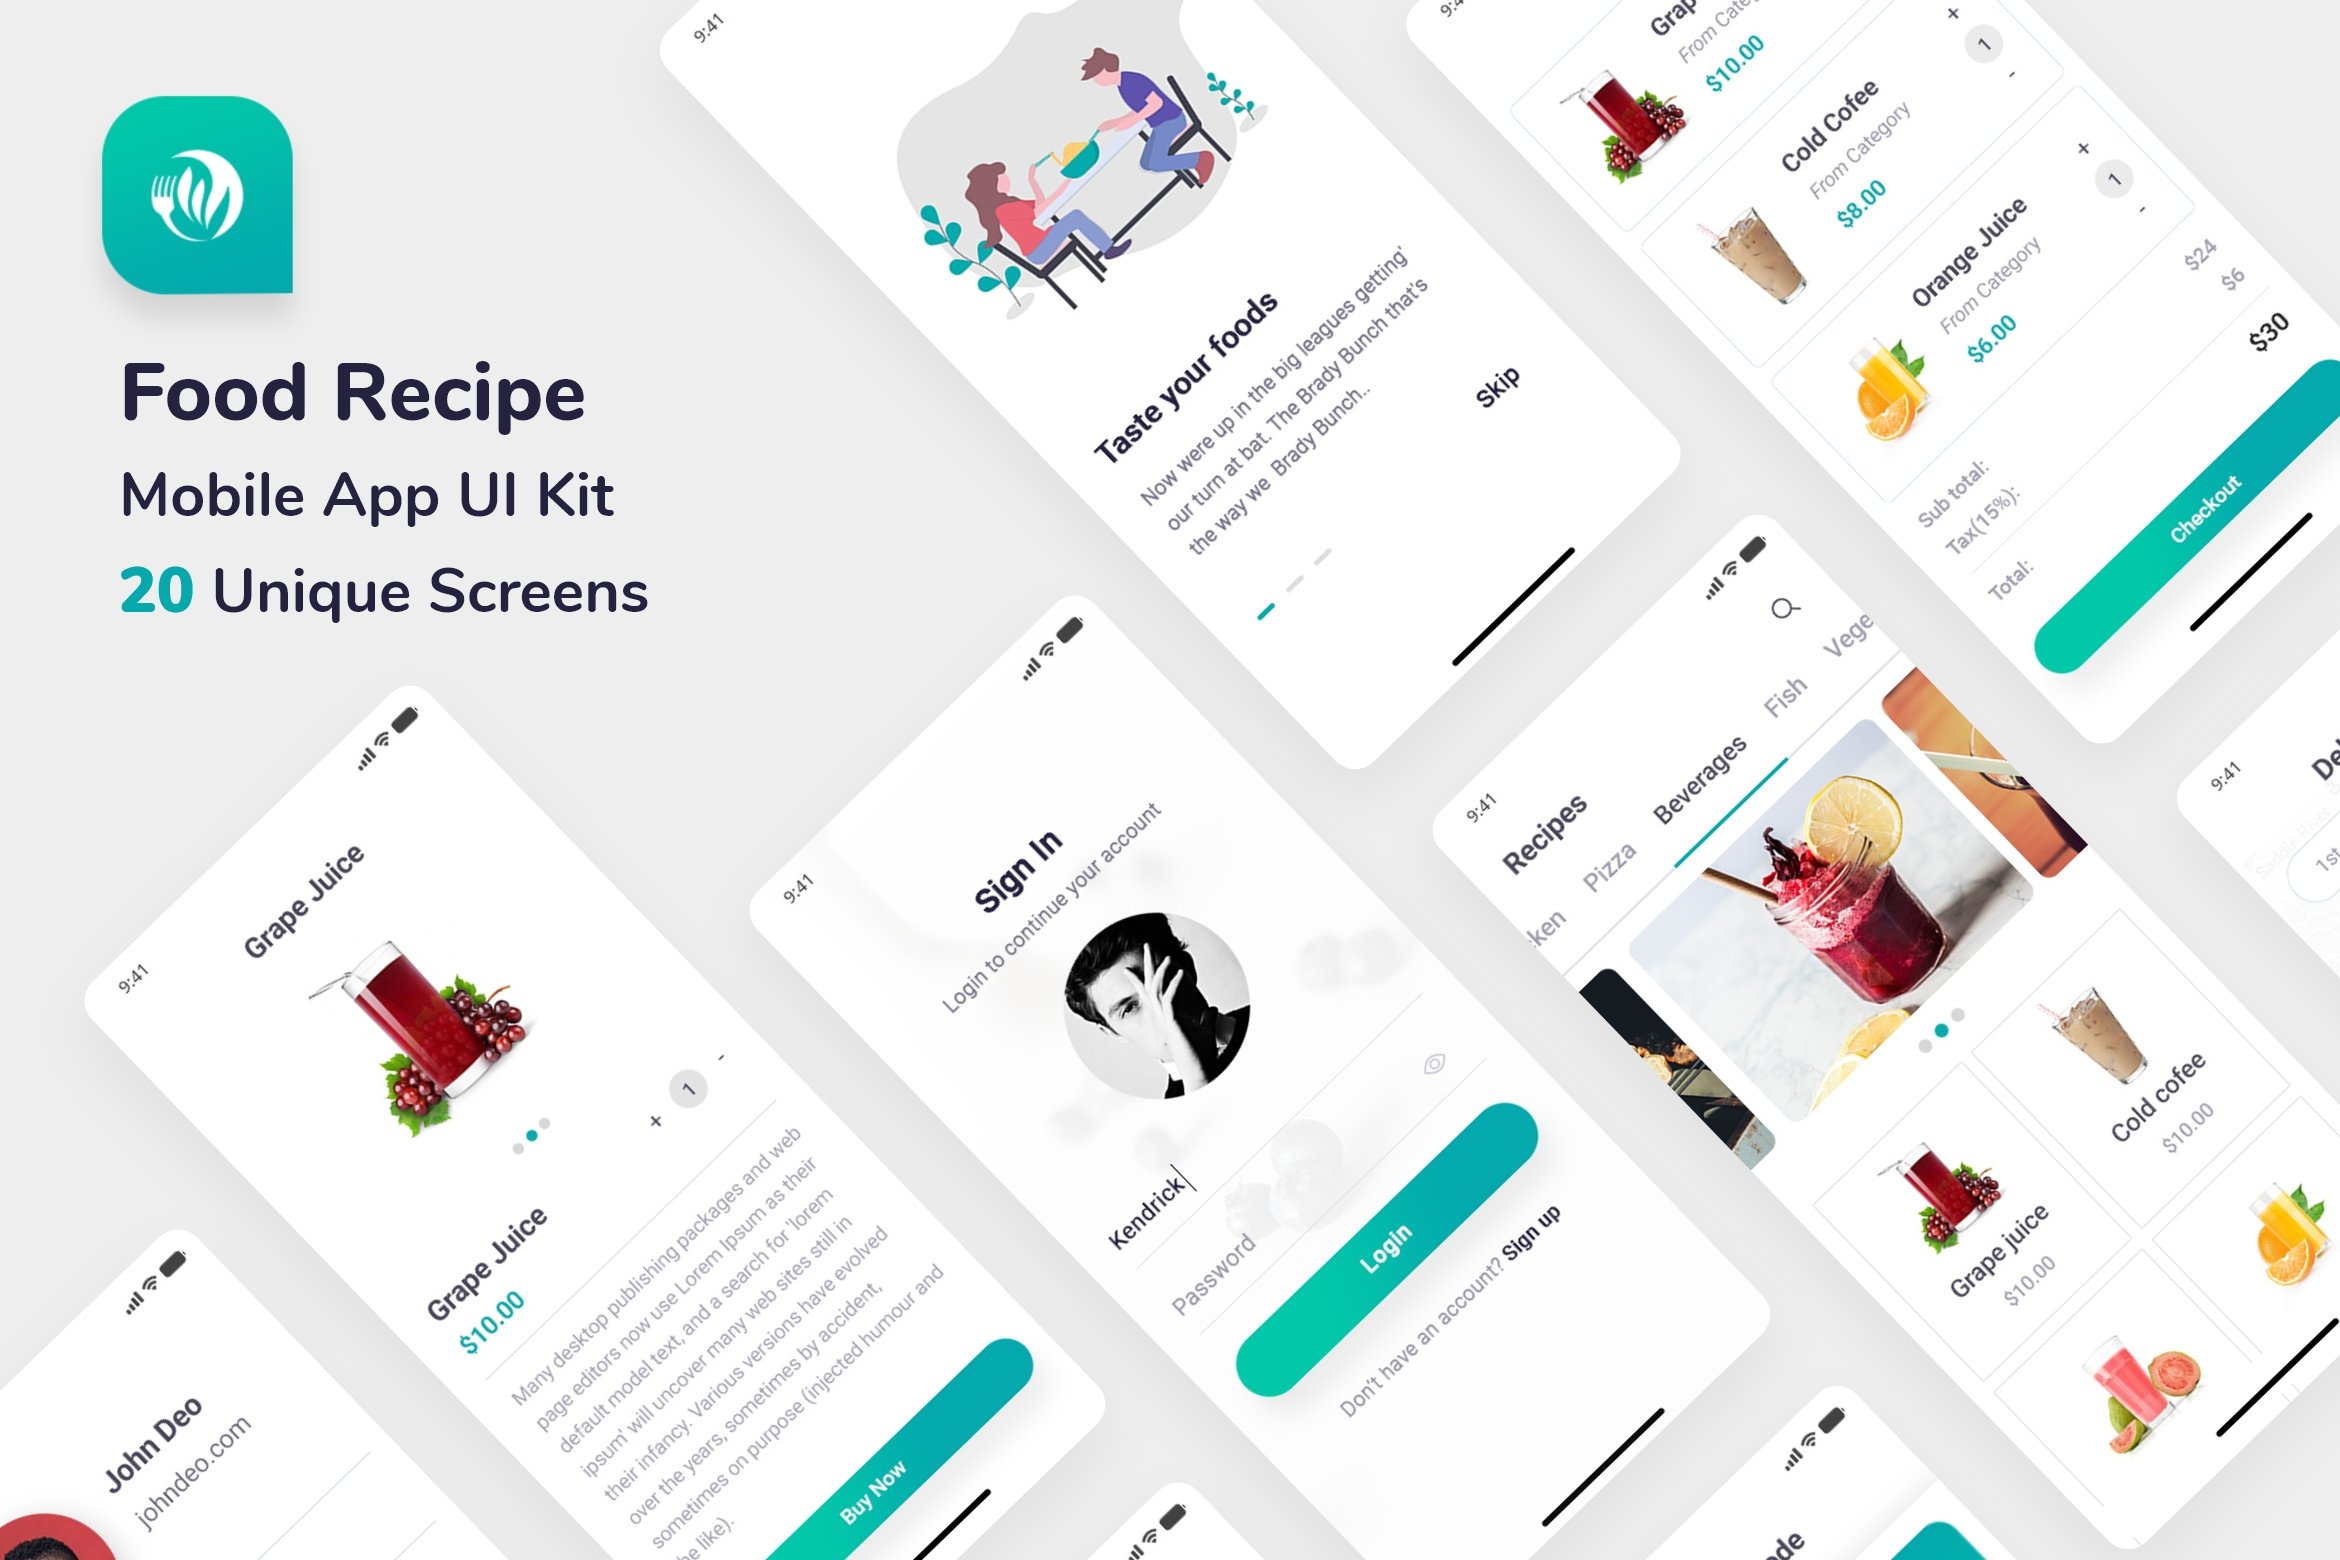 Food Recipe Mobile App UI Kit